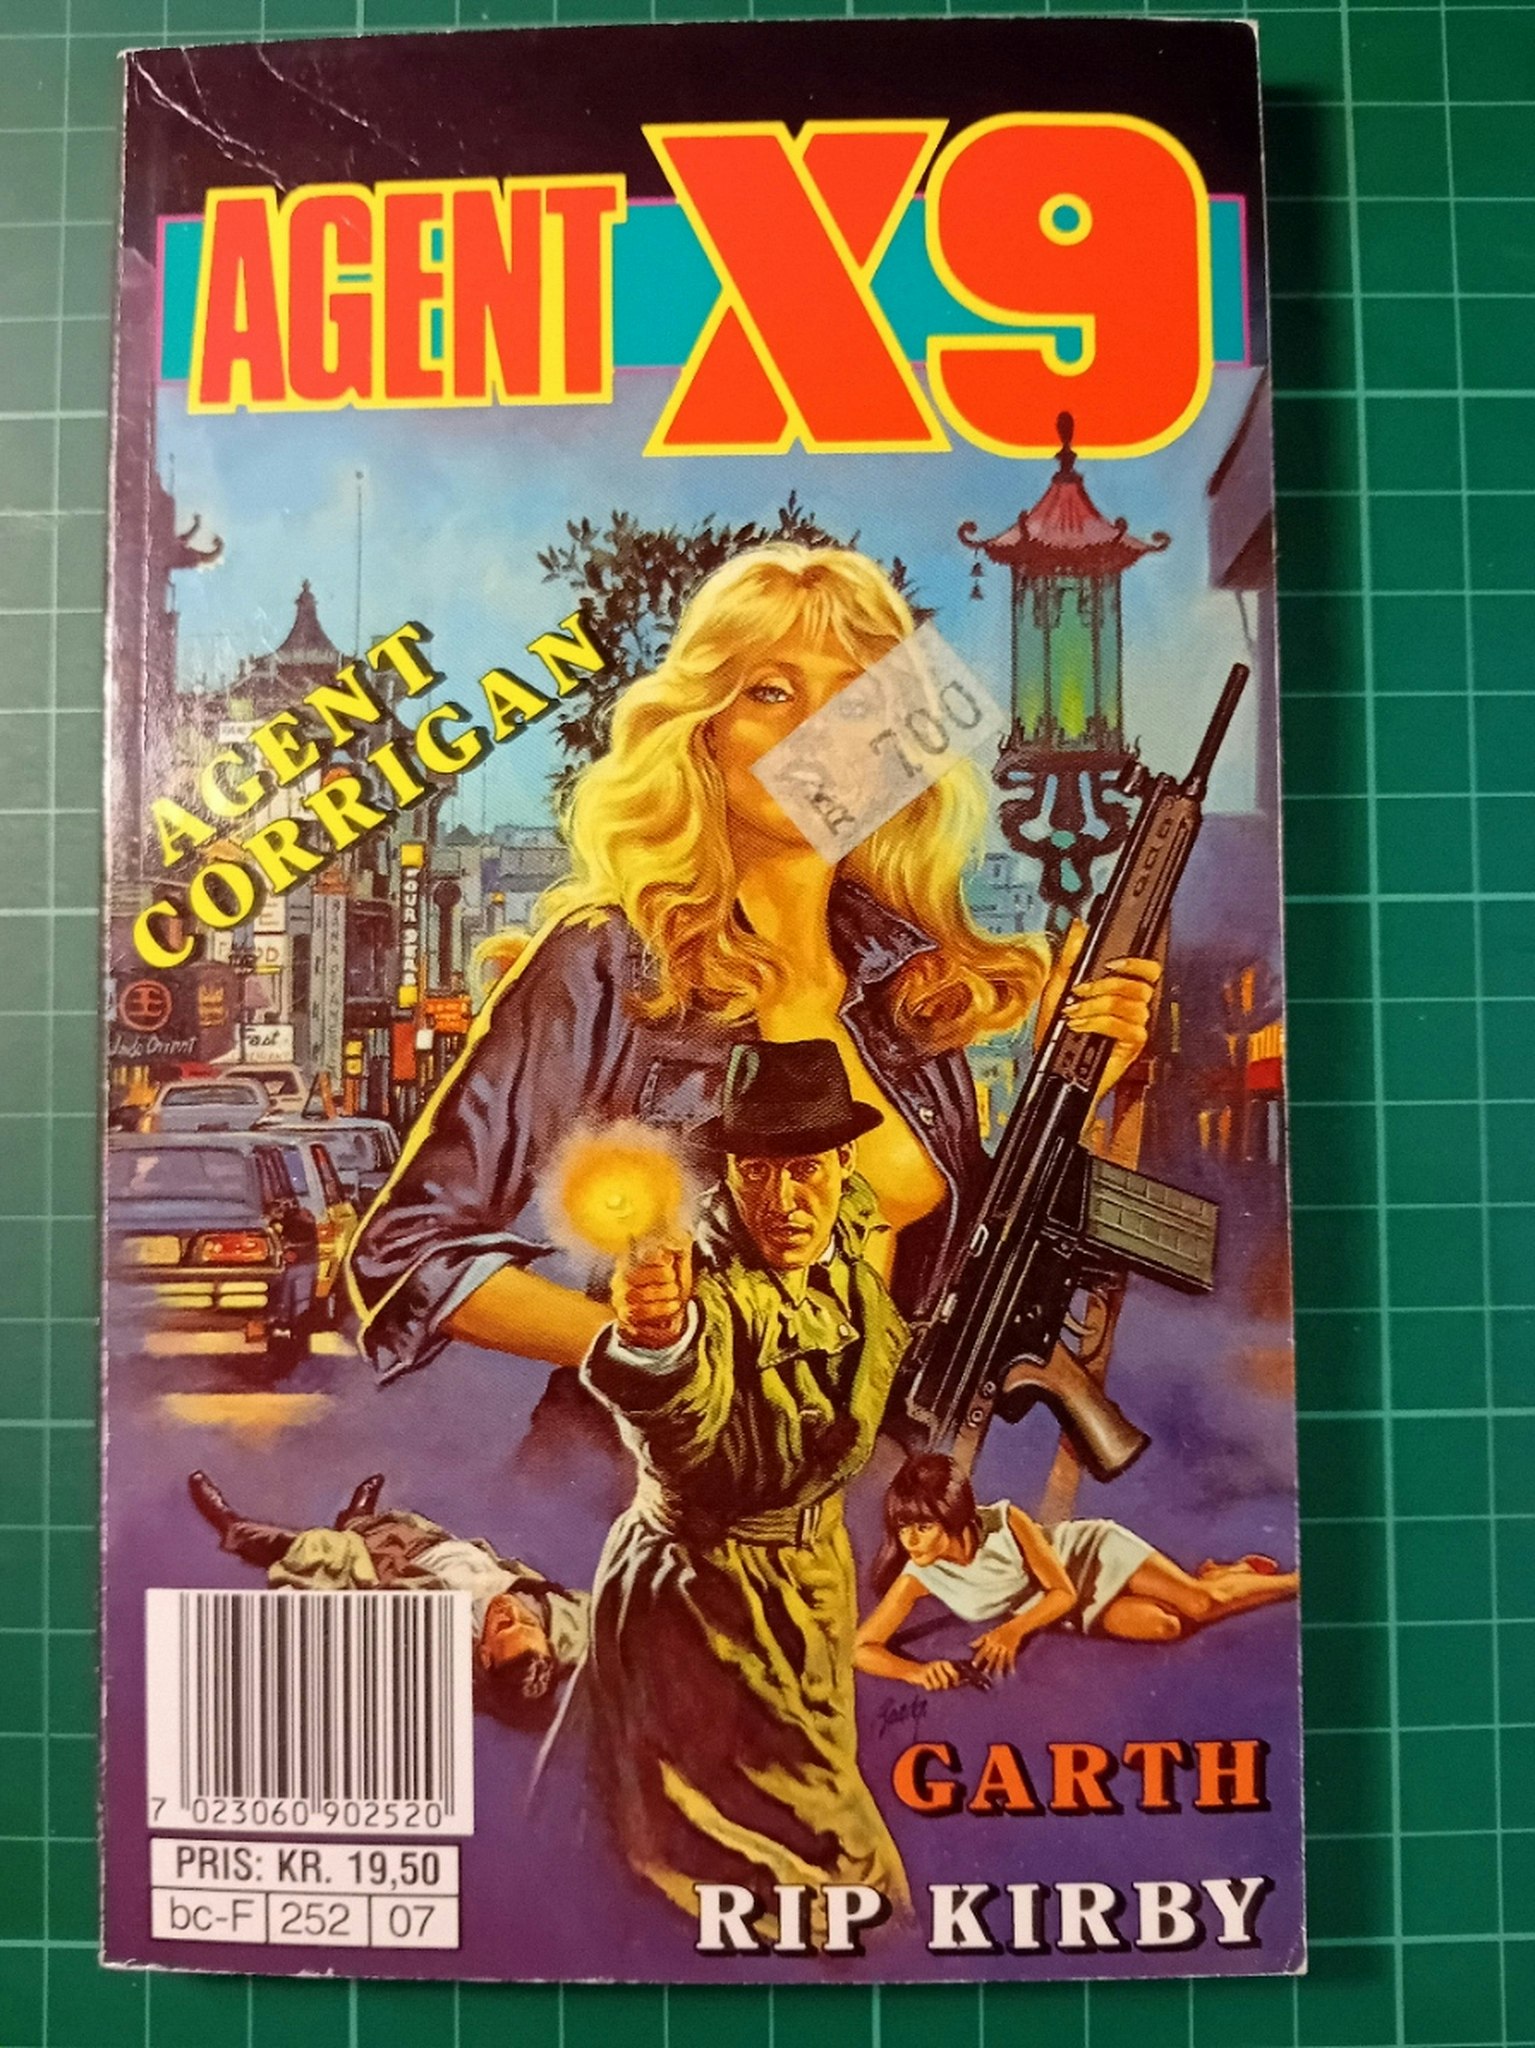 Agent X9 Pocket 07